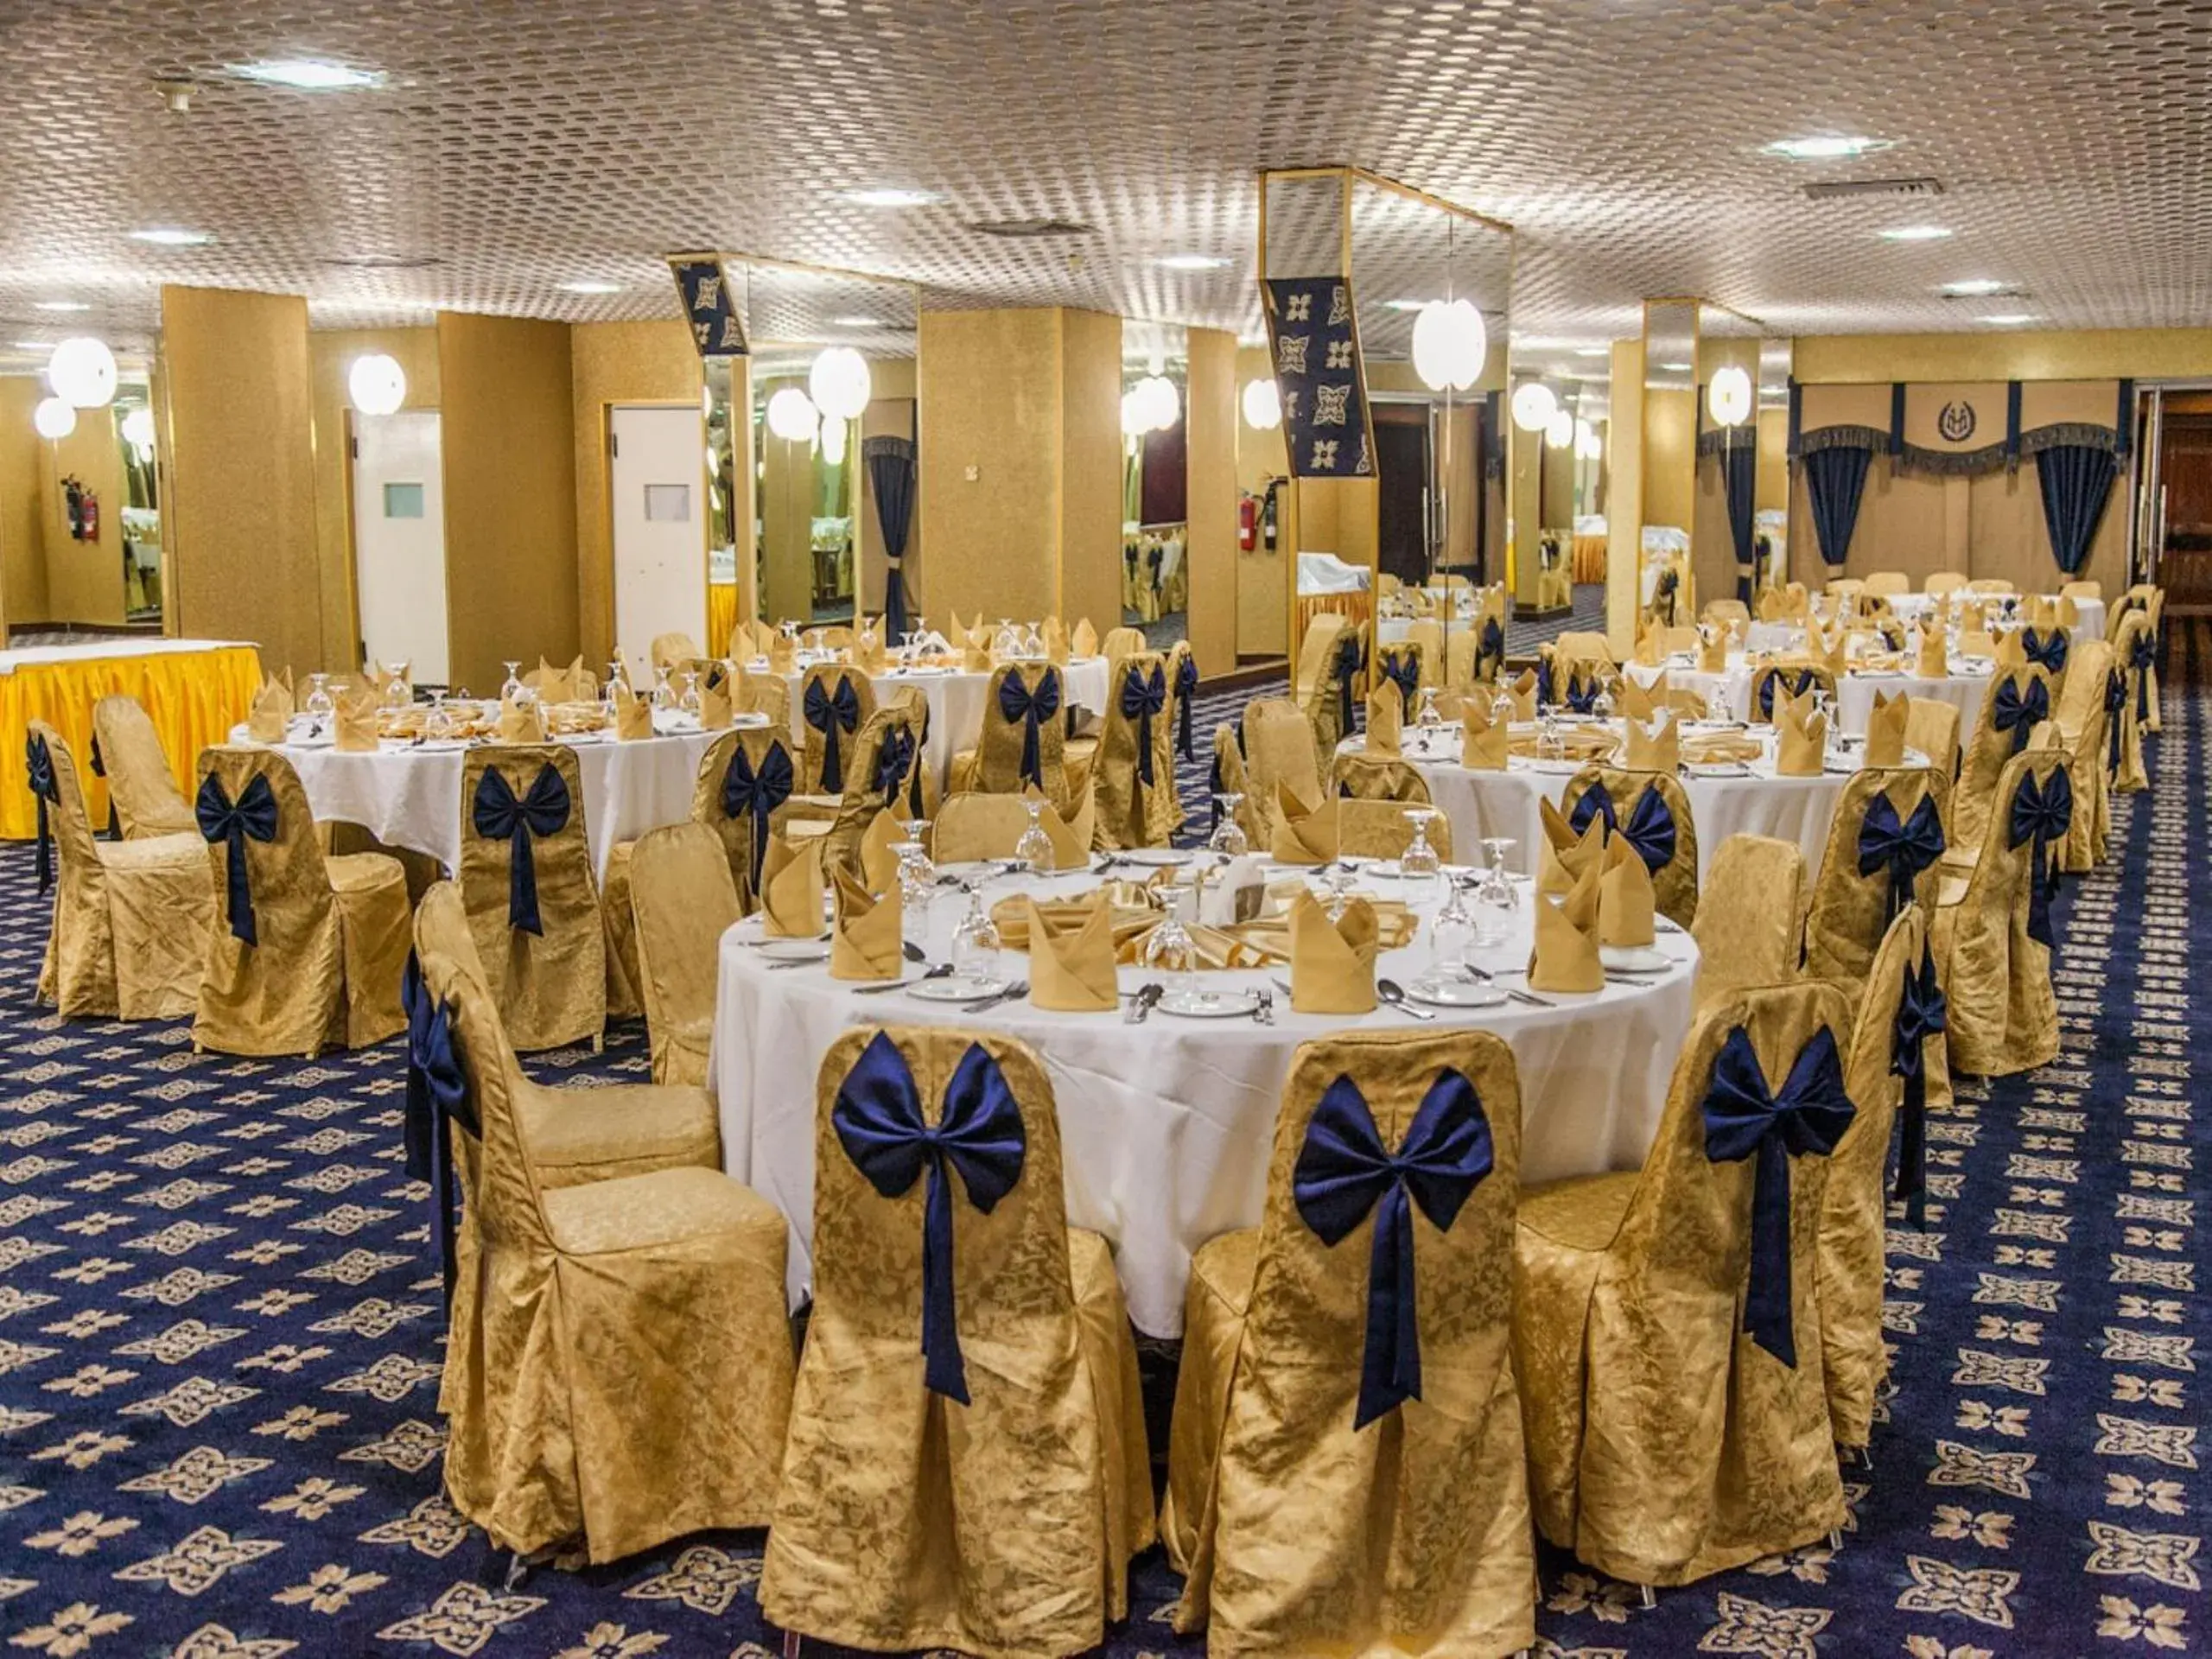 Banquet/Function facilities, Banquet Facilities in Sharjah Carlton Hotel